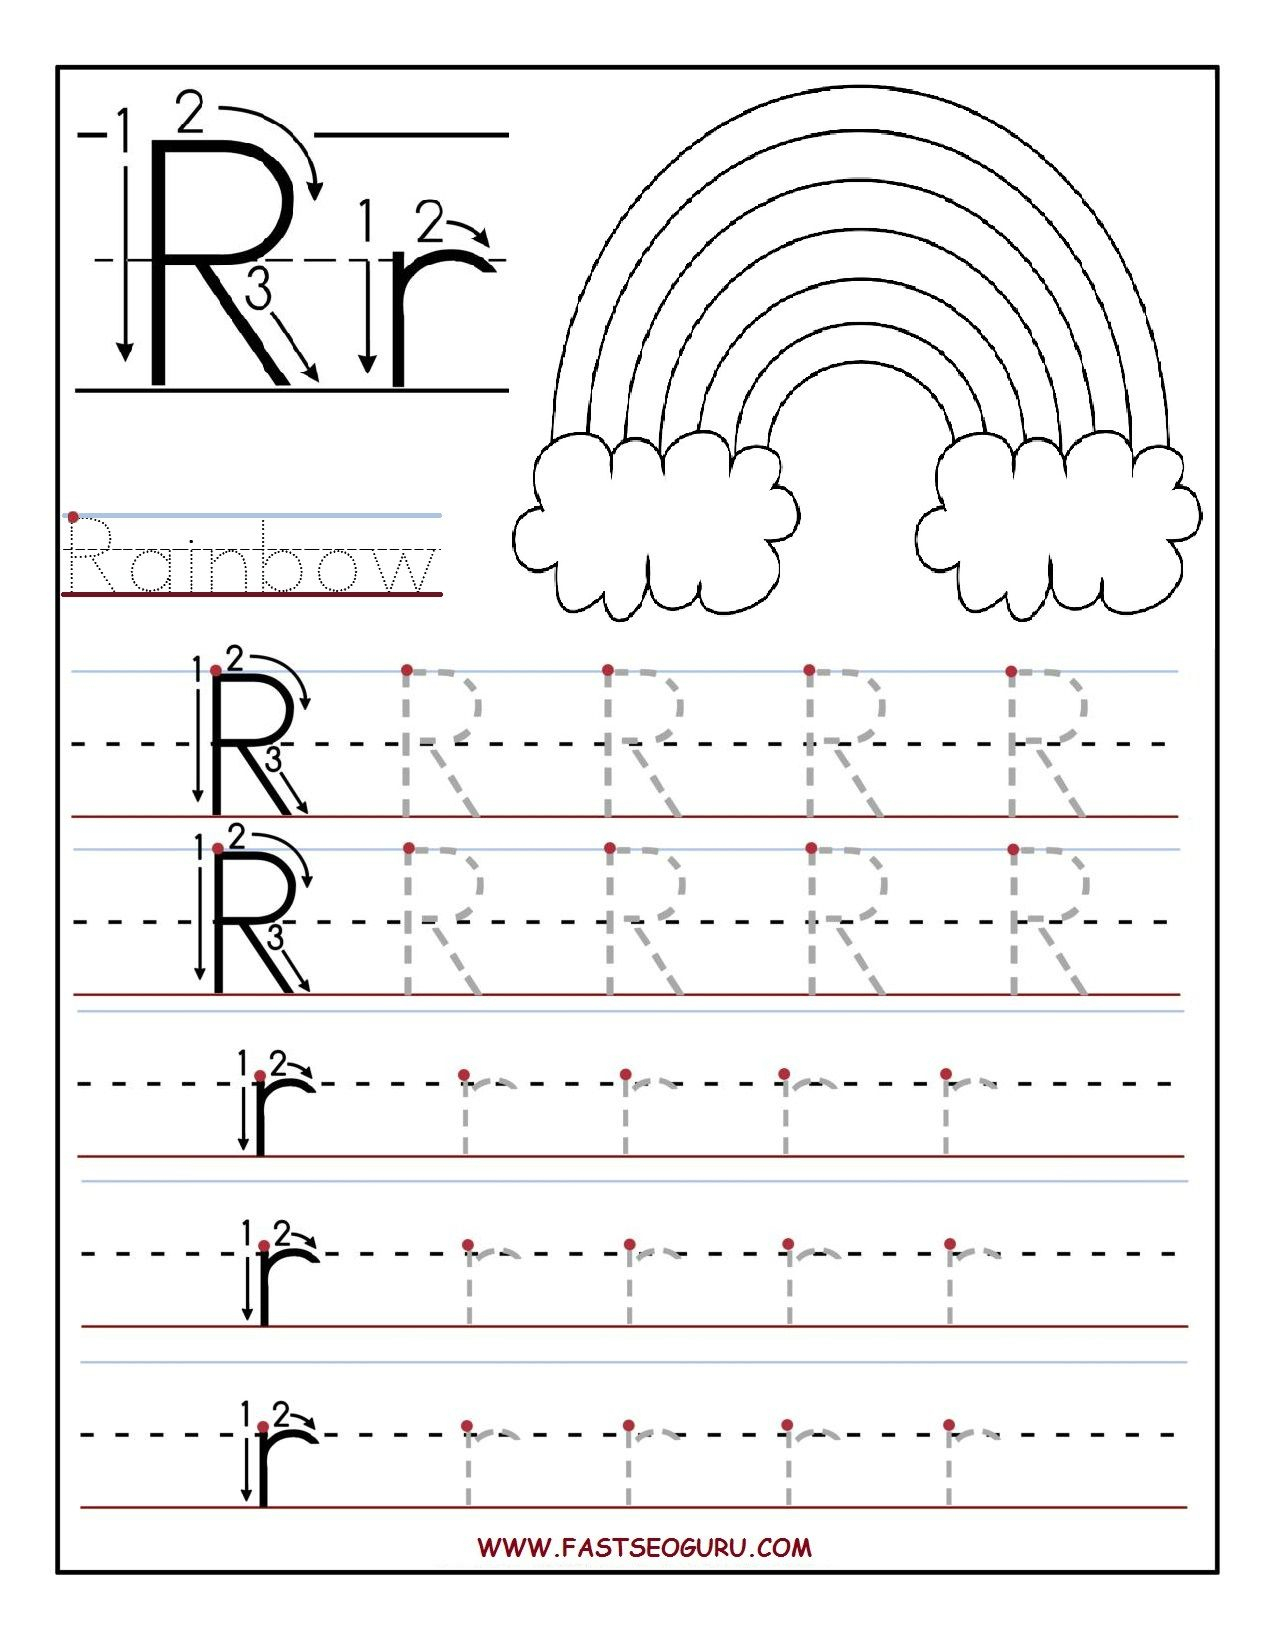 Free Printable Letter R Worksheets | Kids Activities | Pinterest - Free Printable Preschool Worksheets For The Letter R